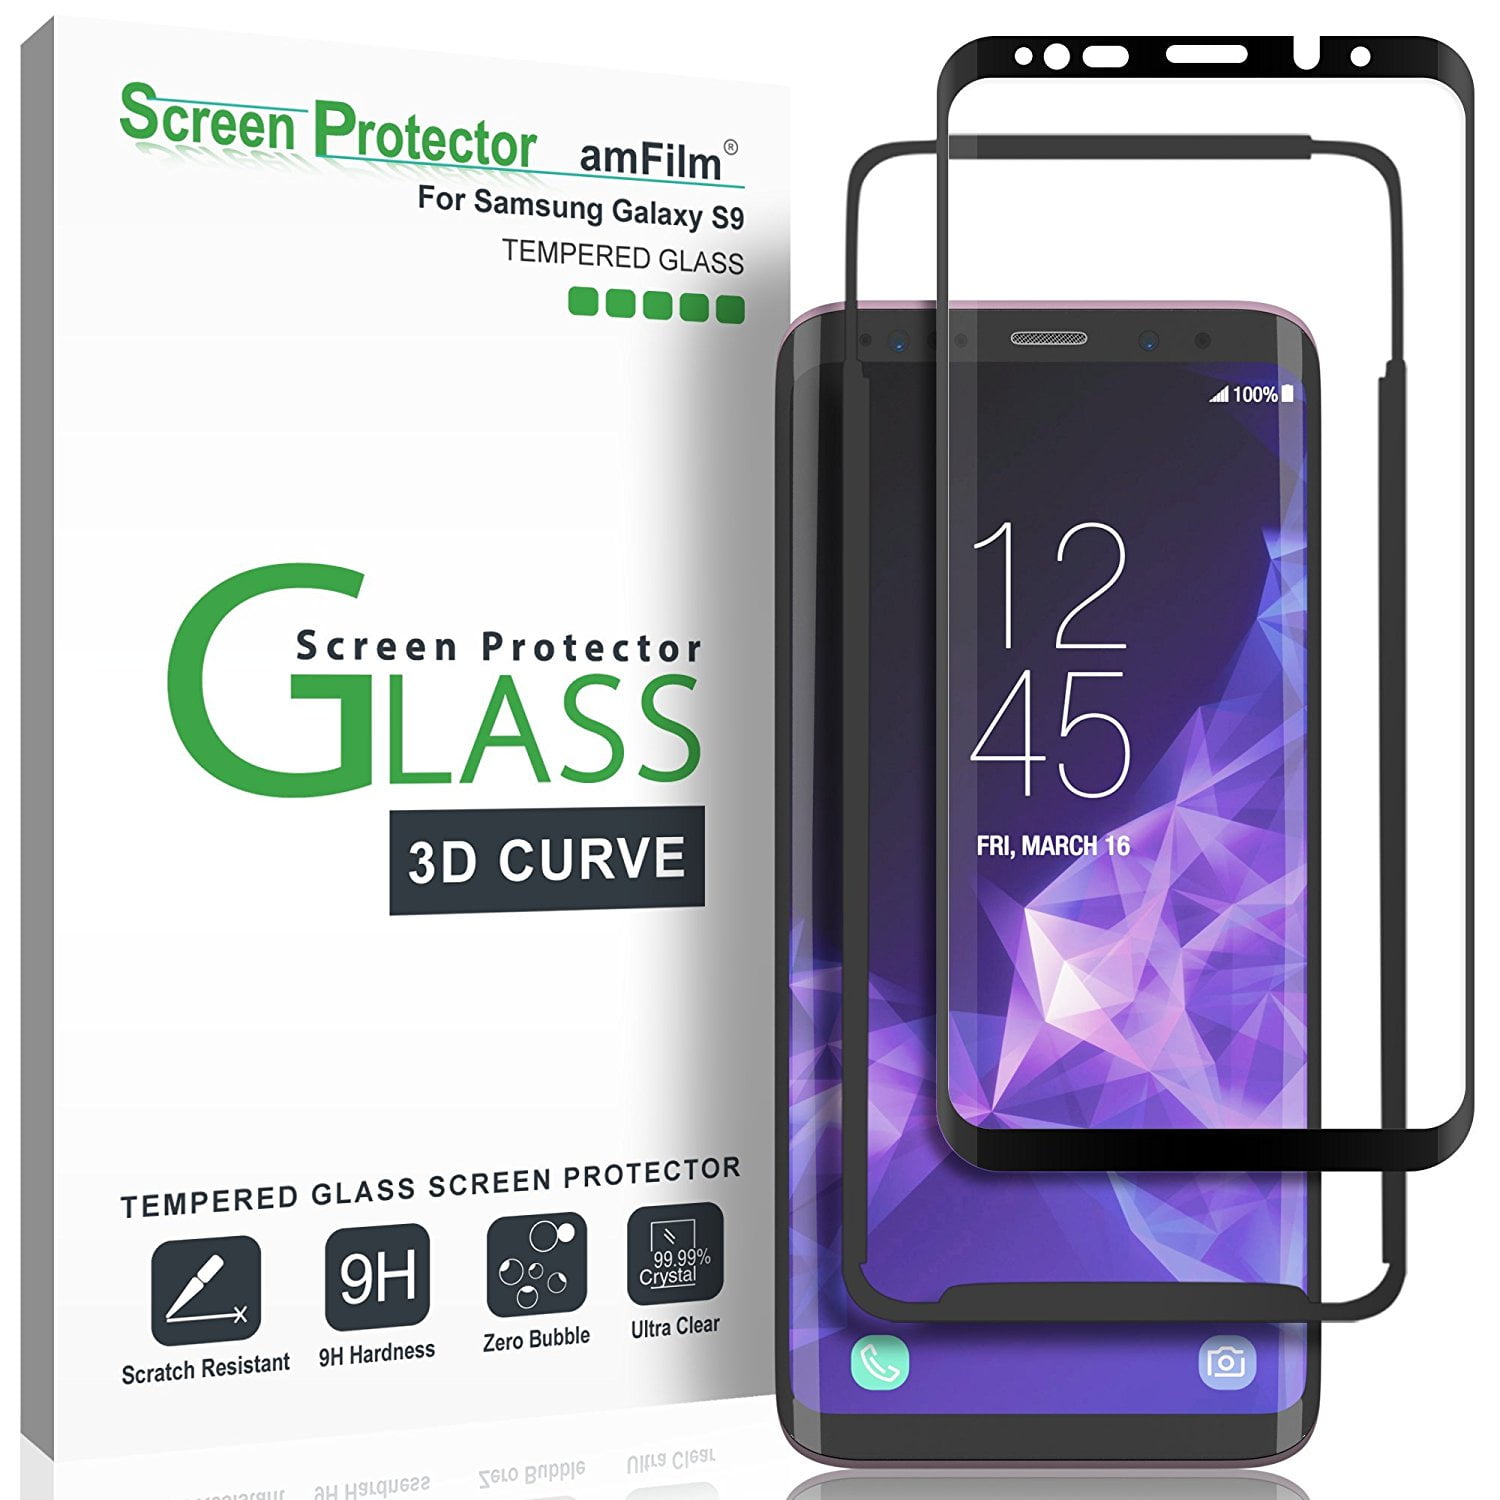 Anti Scratch Screen Protector Glass for Samsung Galaxy J7 2016 Bear Village Ultra Clear Screen Protector Galaxy J7 2016 Tempered Glass Screen Protector 1 Pack 